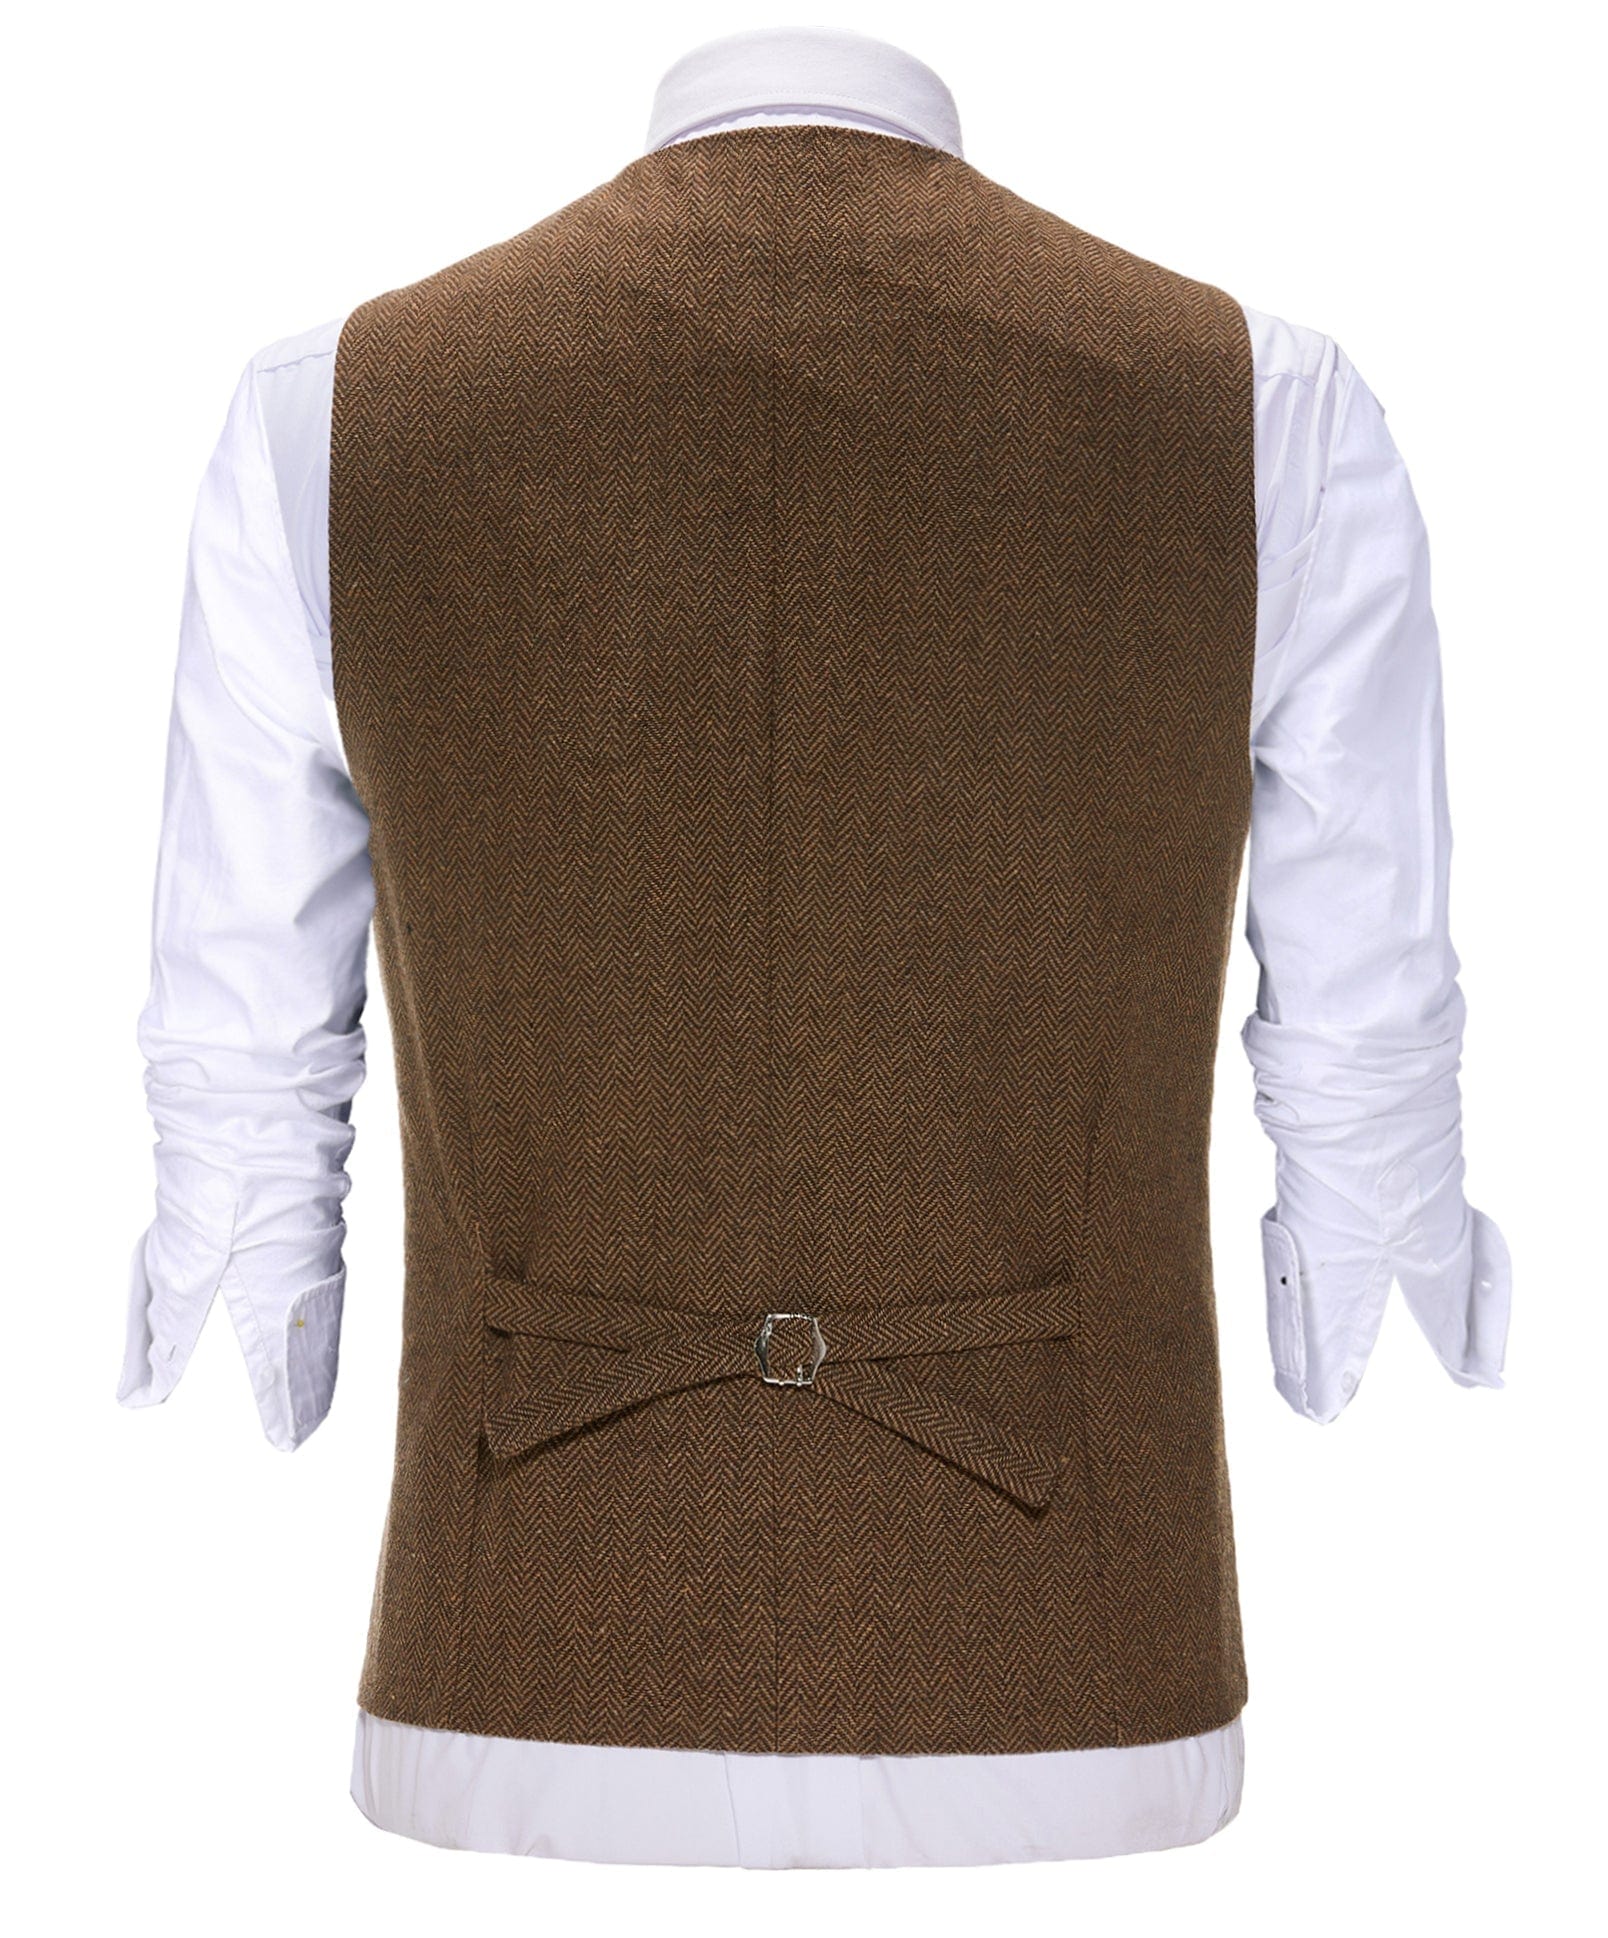 ceehuteey Men's Suit Vest Herringbone Notch Lapel Waistcoat